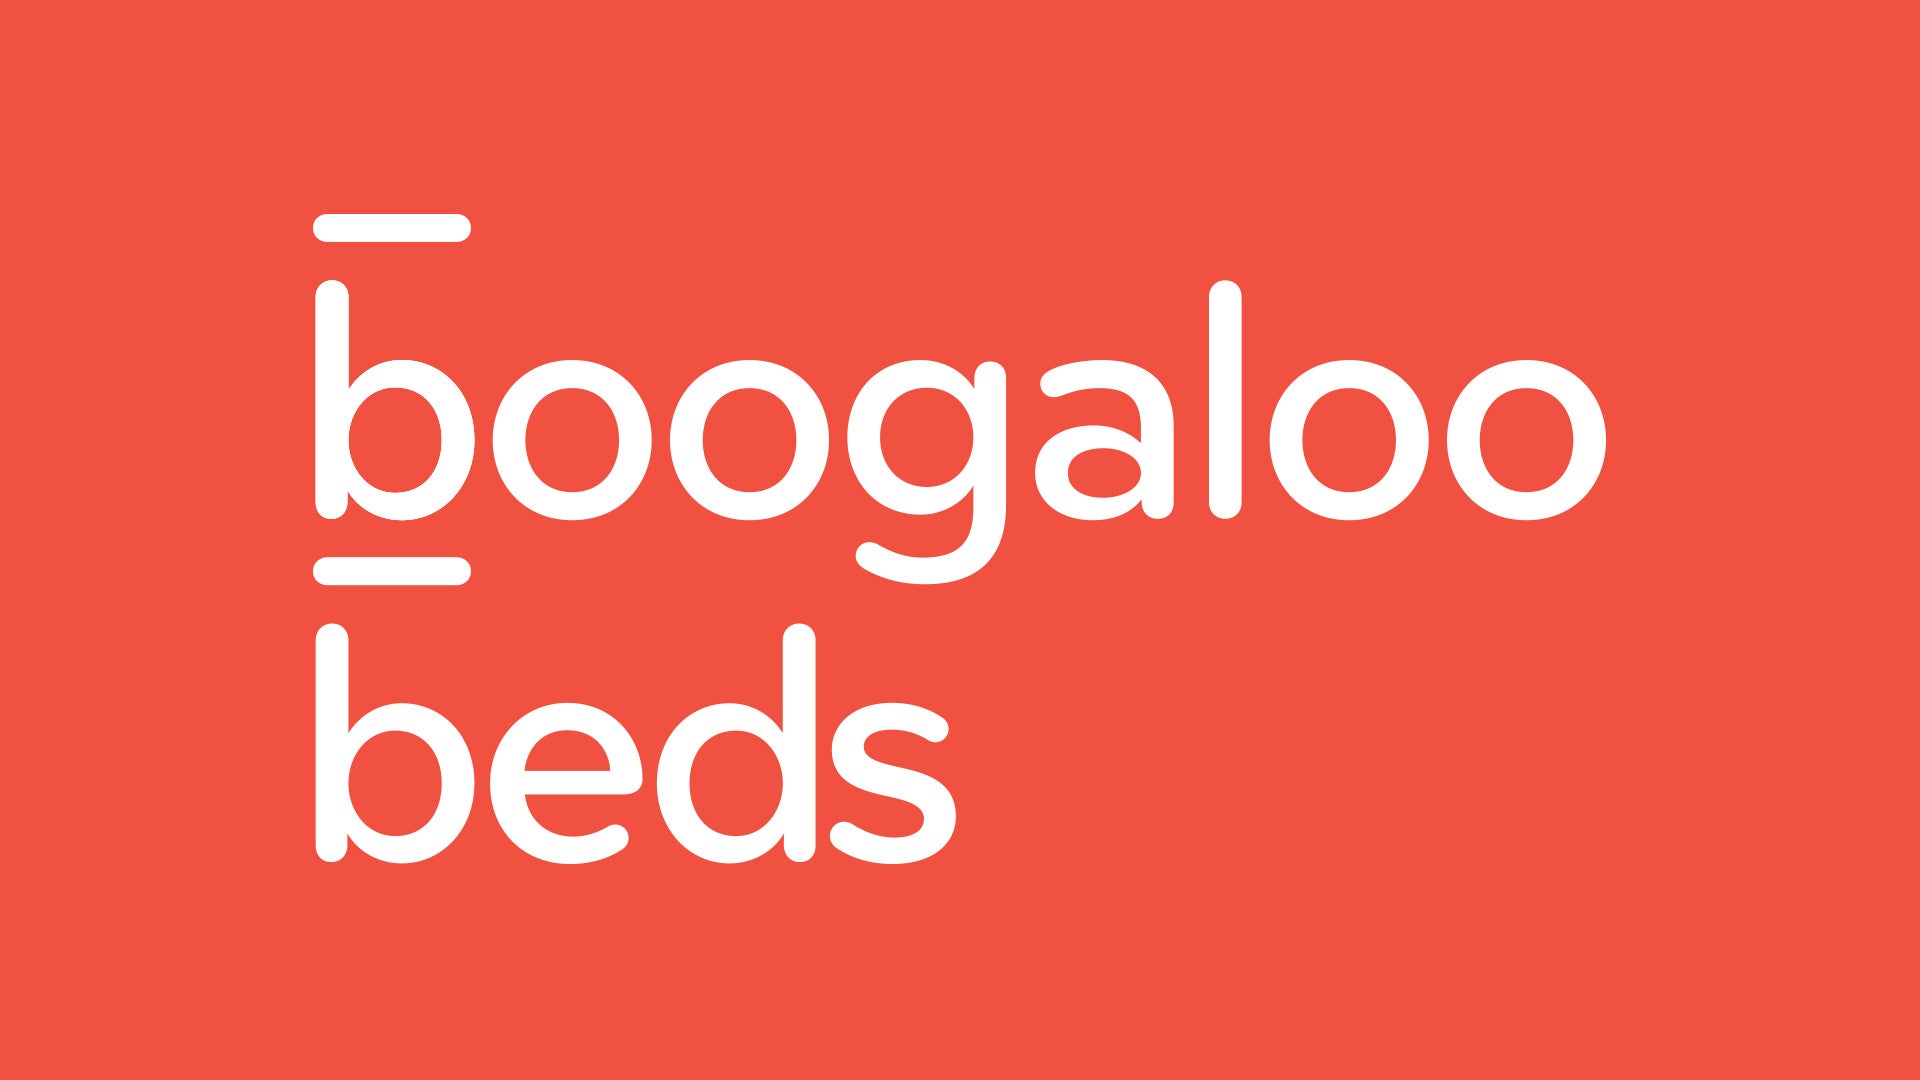 Boogaloo beds logo